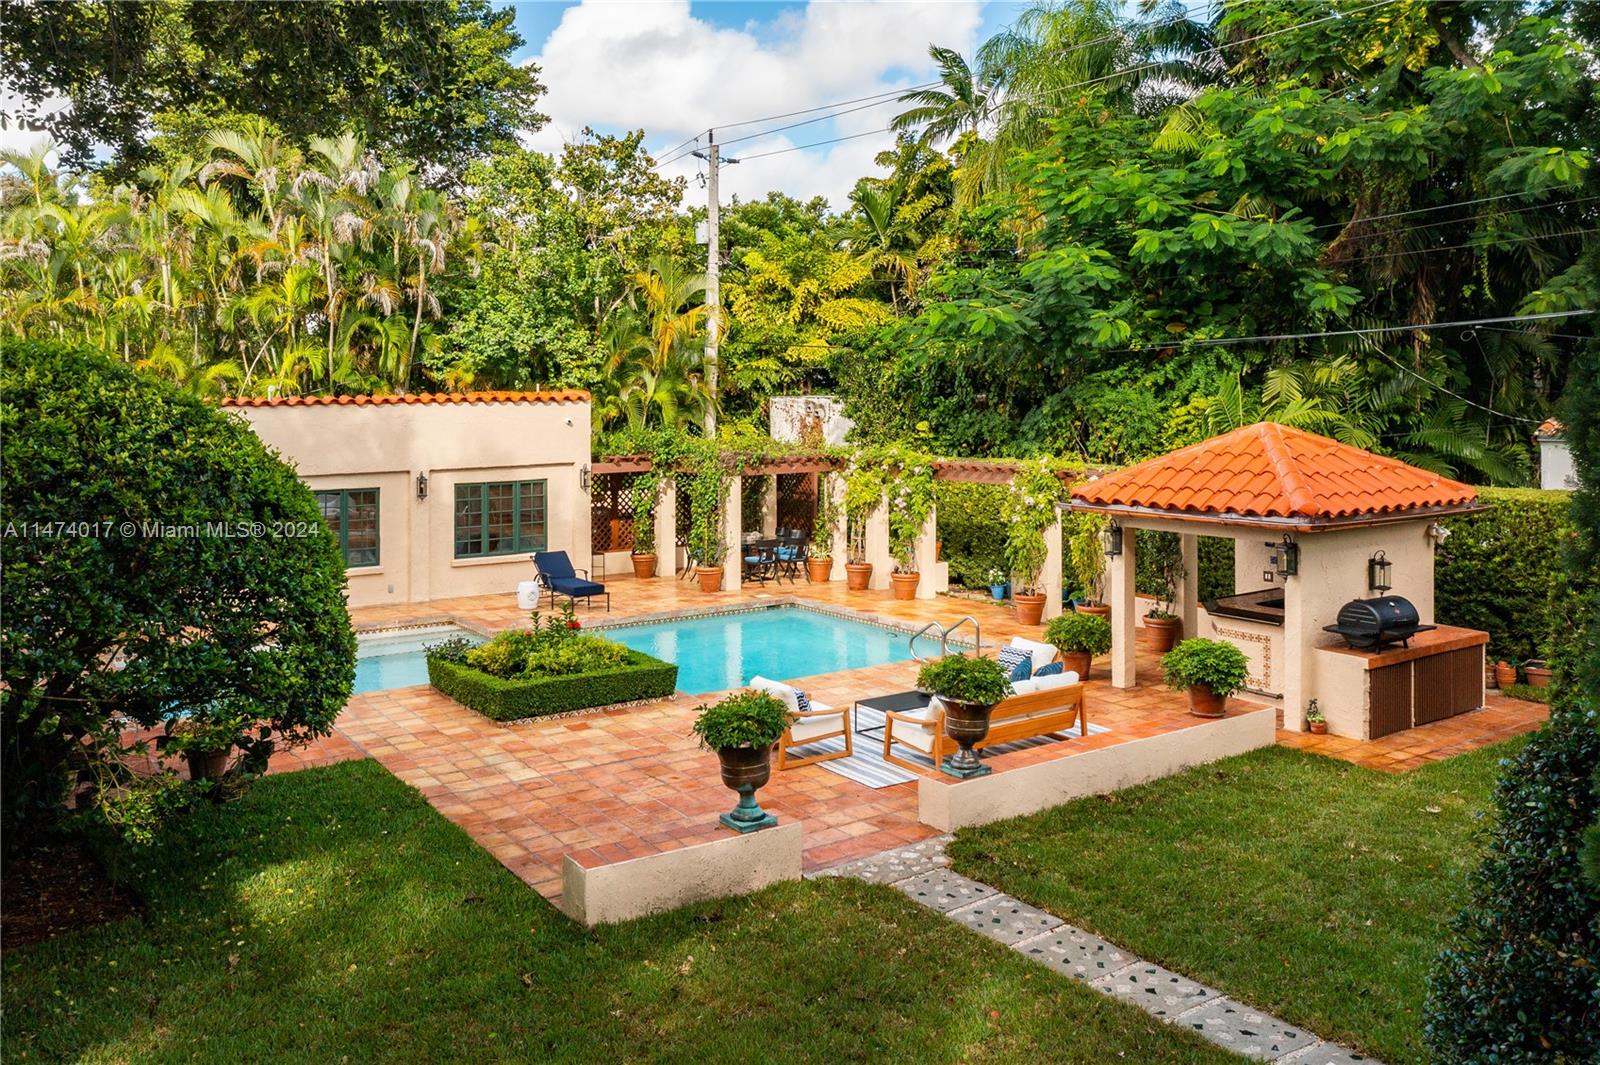 Property for Sale at 1203 Alhambra Cir Cir, Coral Gables, Broward County, Florida - Bedrooms: 4 
Bathrooms: 4  - $3,999,000